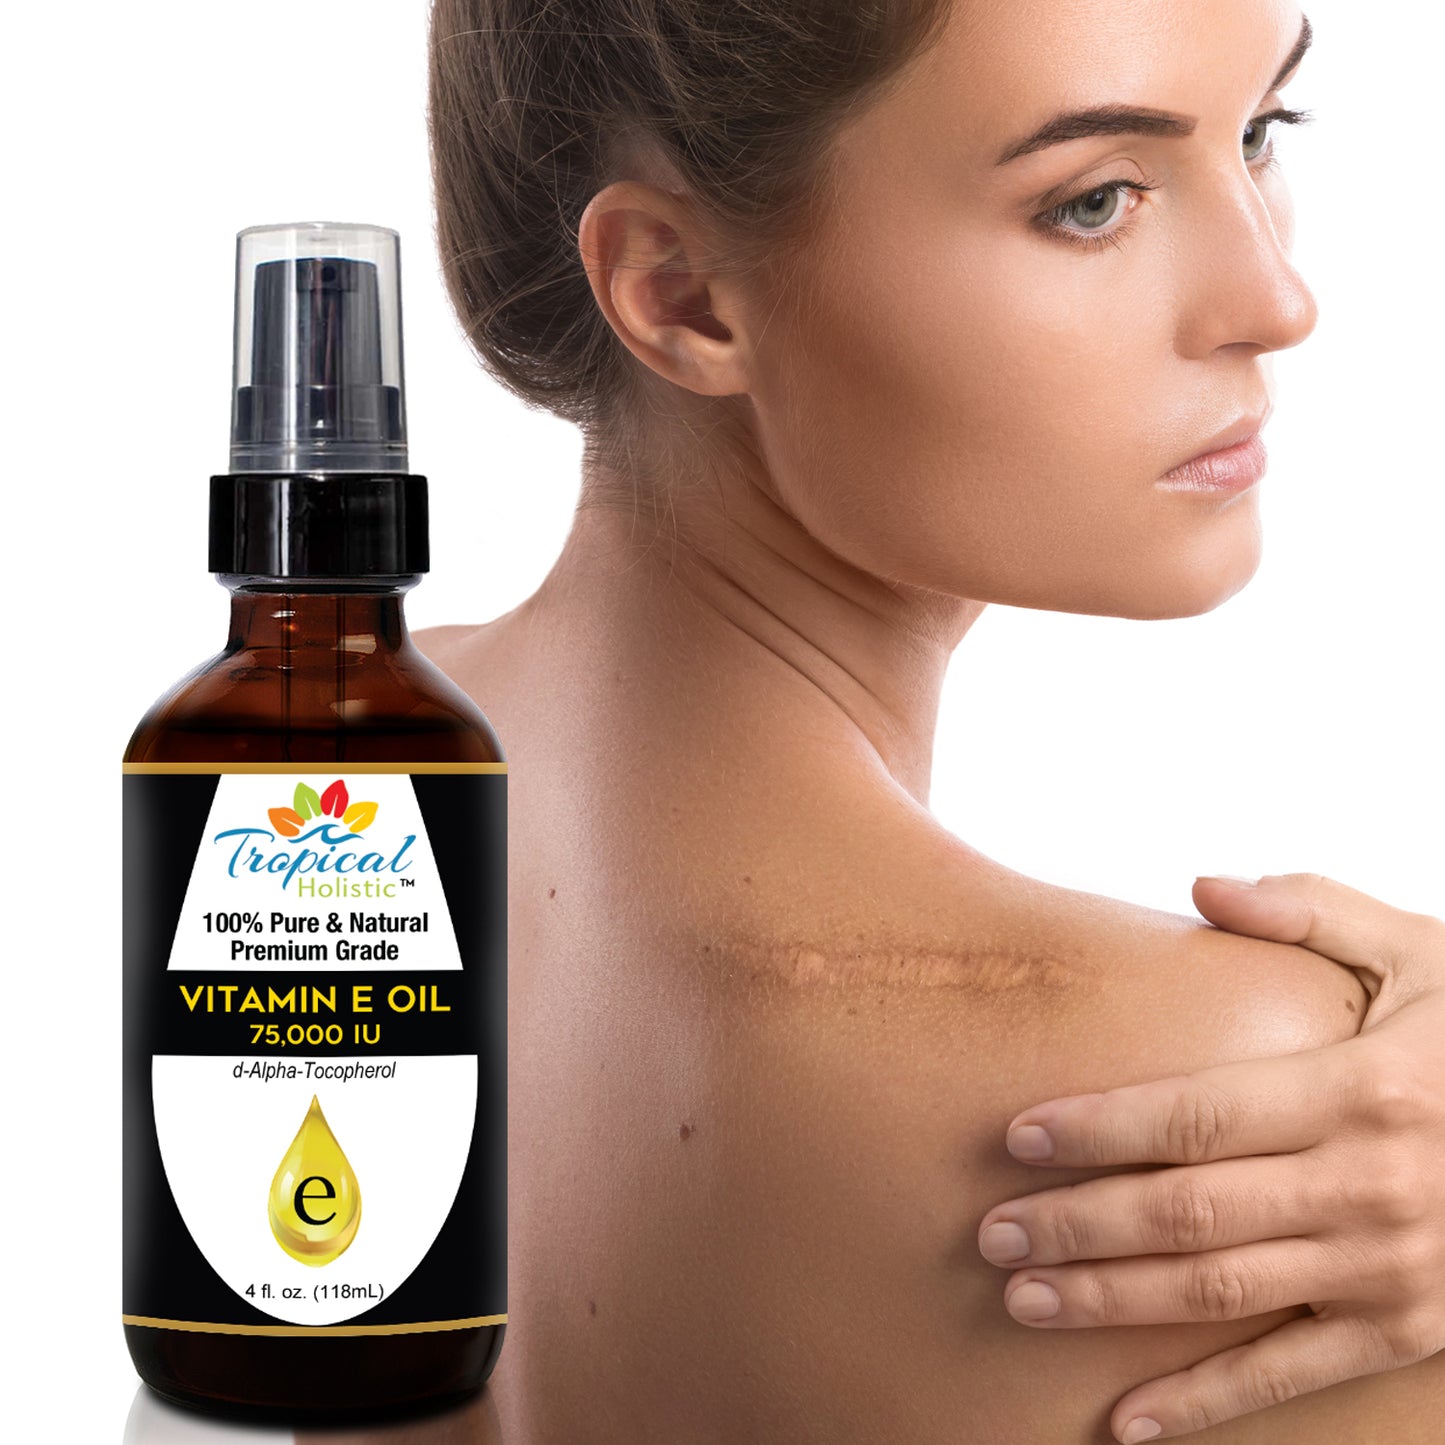 vitamin e oil for scar surgery